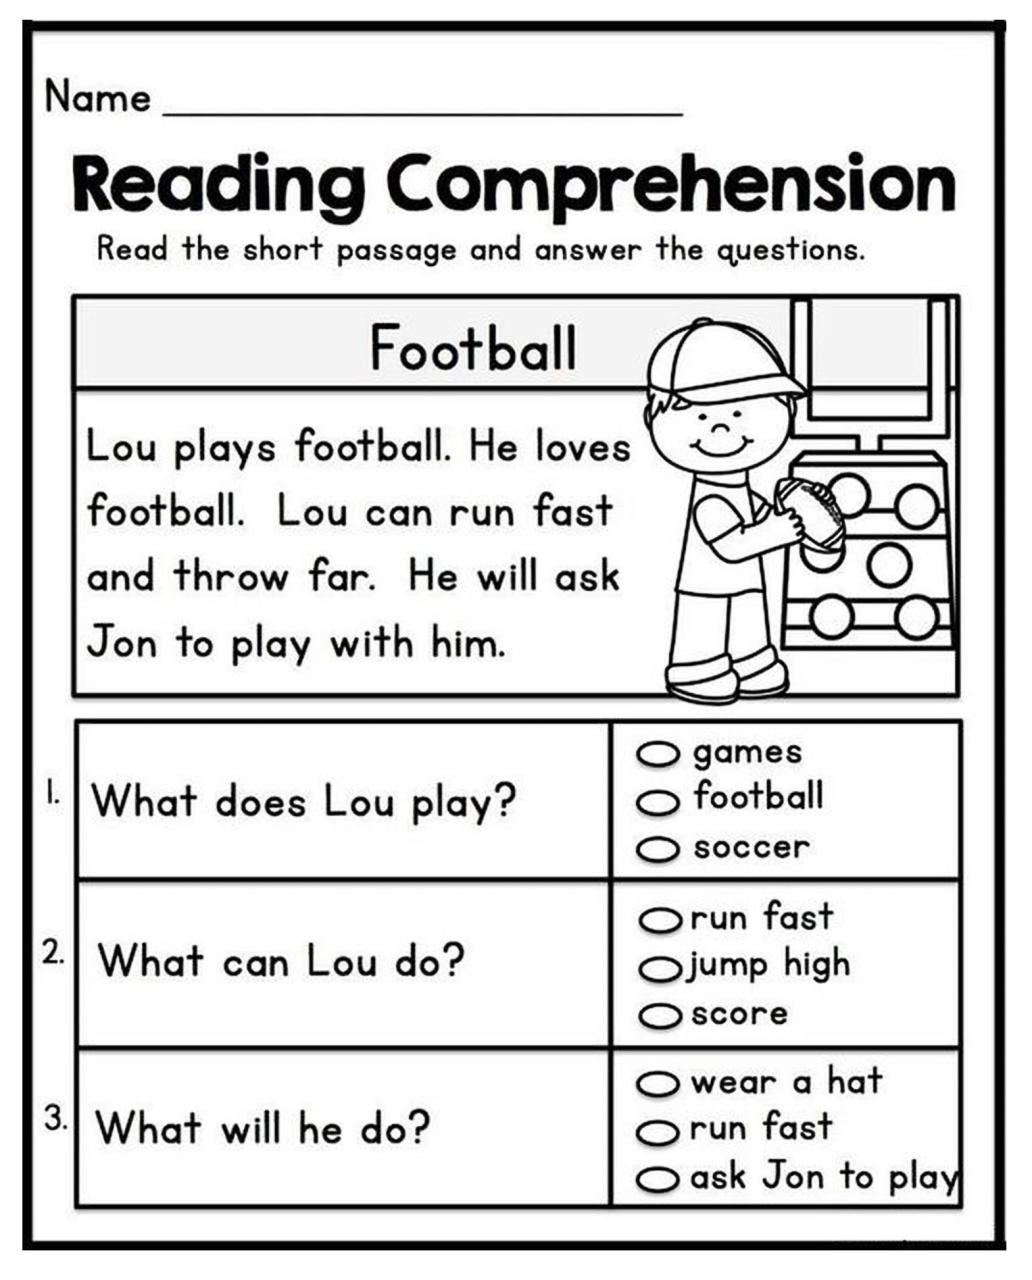 Reading Comprehension Worksheets For First Graders